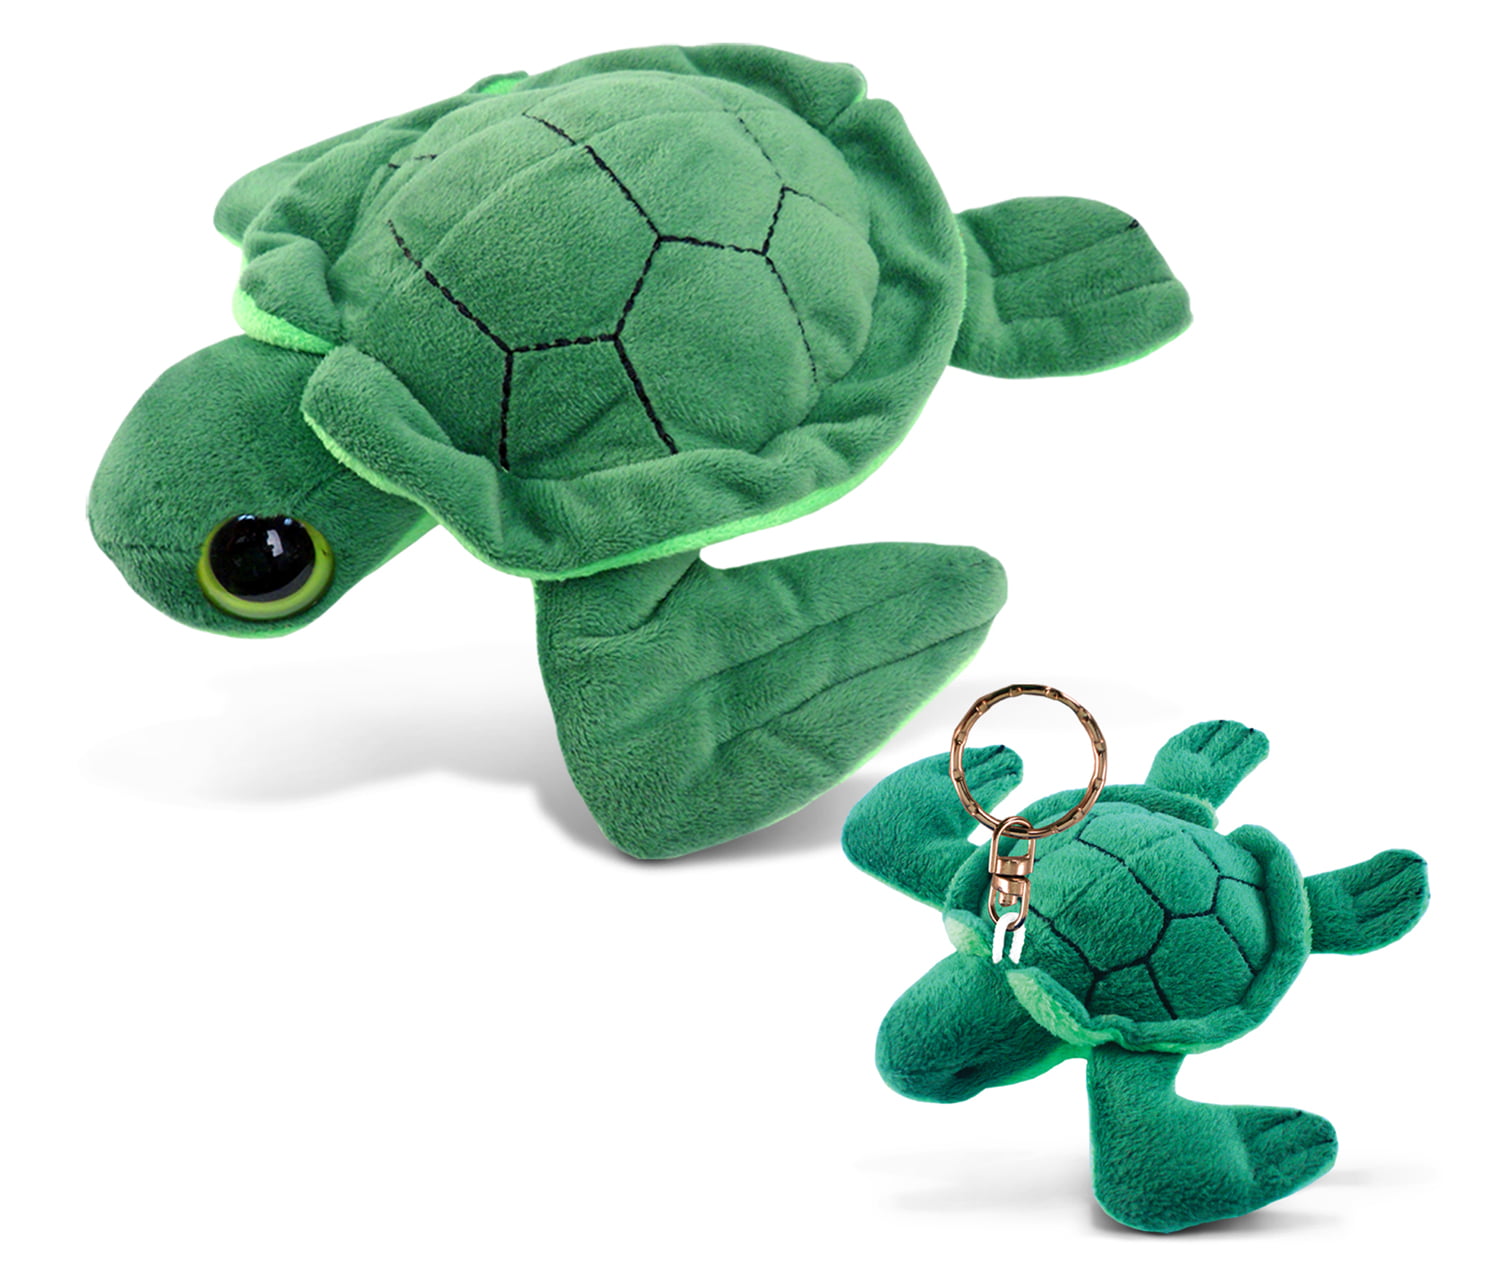 Handmade Leather Turtle Décor Turtle Stuffed Animal Leather Turtle Toy Gift Leather Turtle Spring Décor Leather Turtle Door Stopper